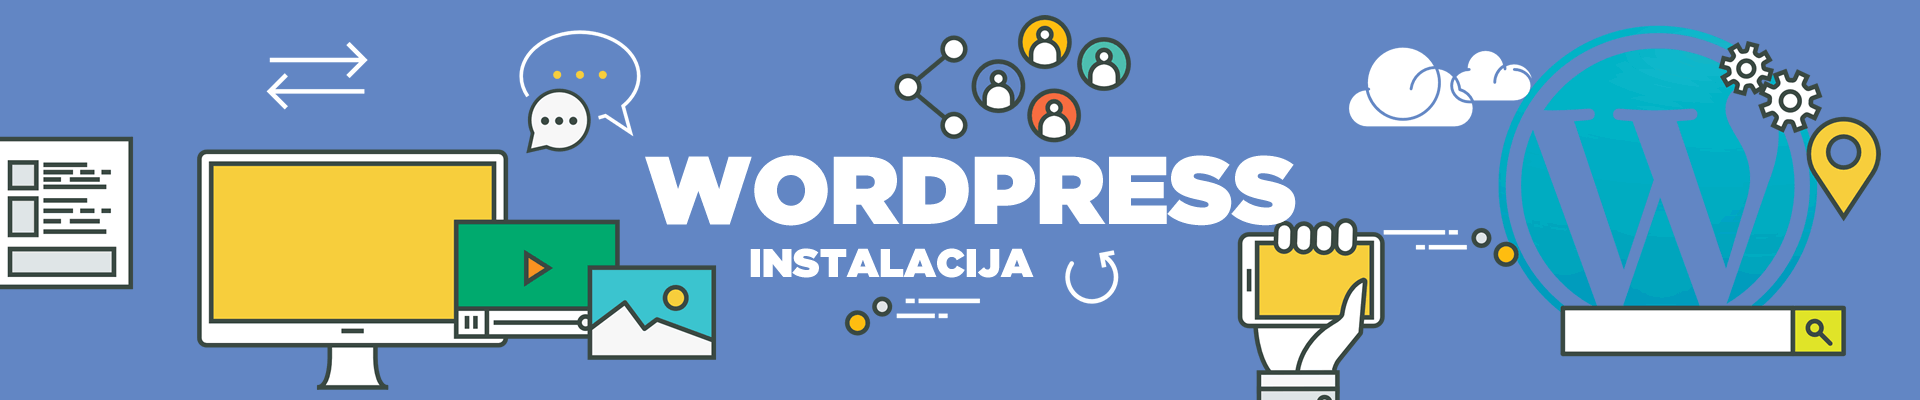 WordPress - instalacija